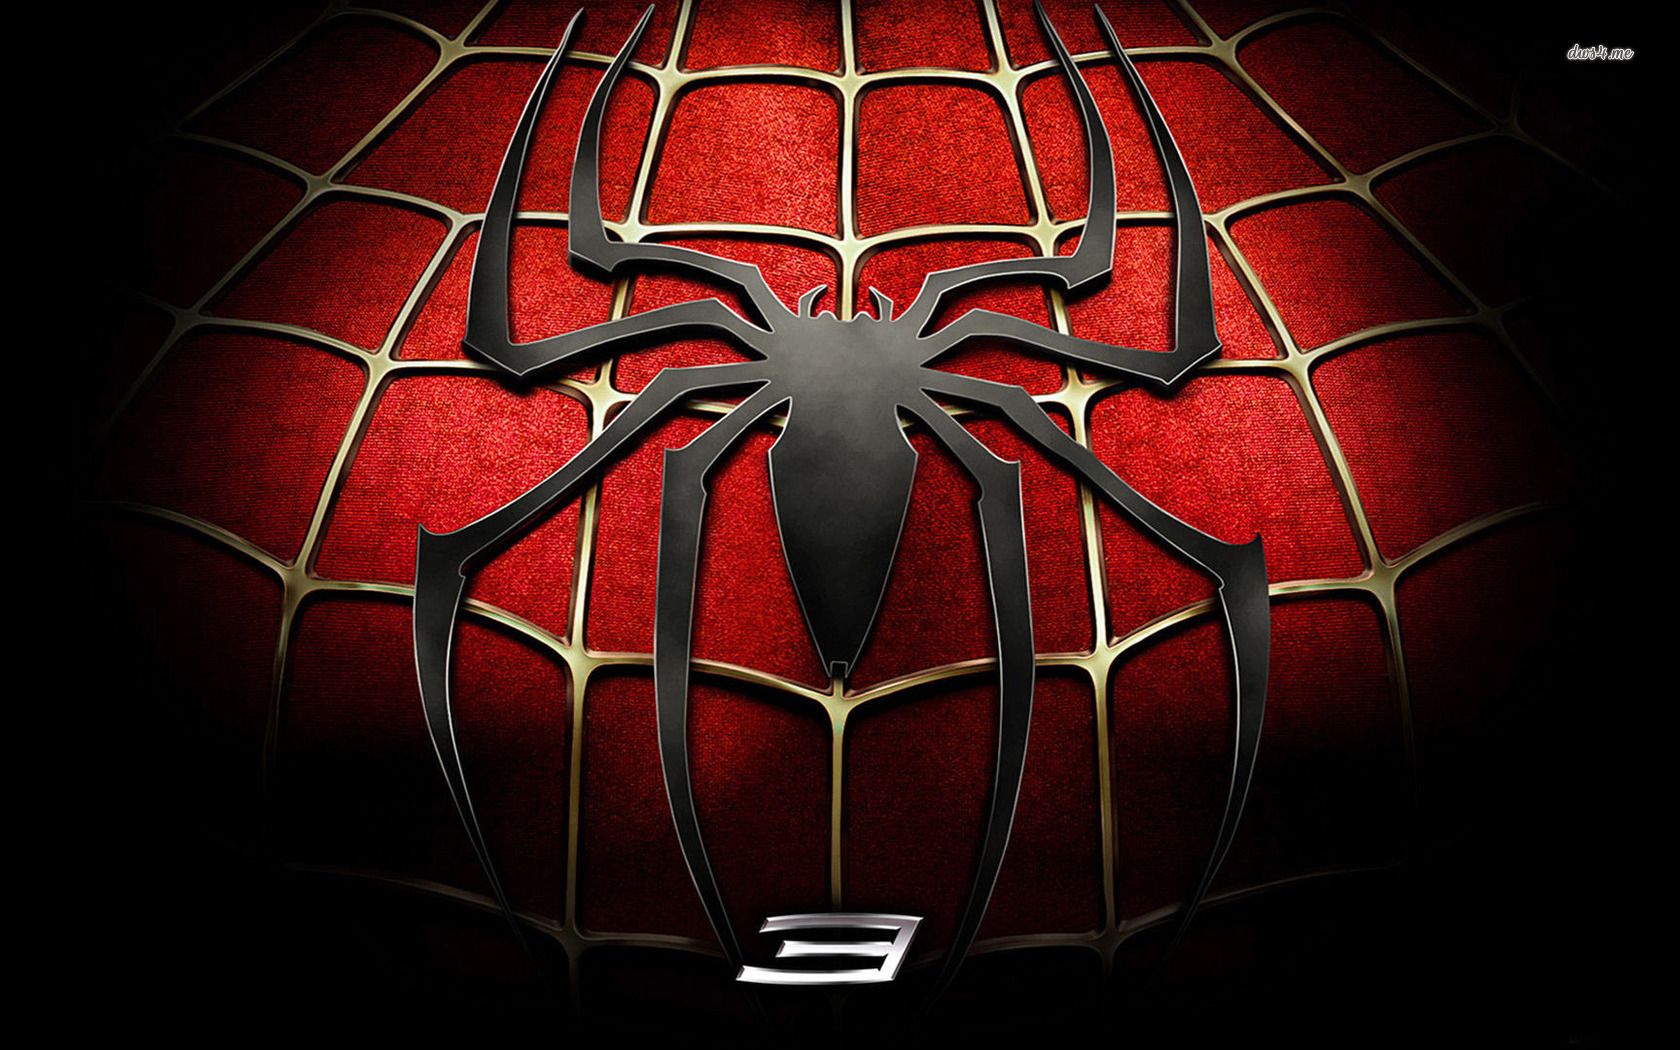 Spider-Man 3 logo wallpaper - Movie wallpapers - #43499